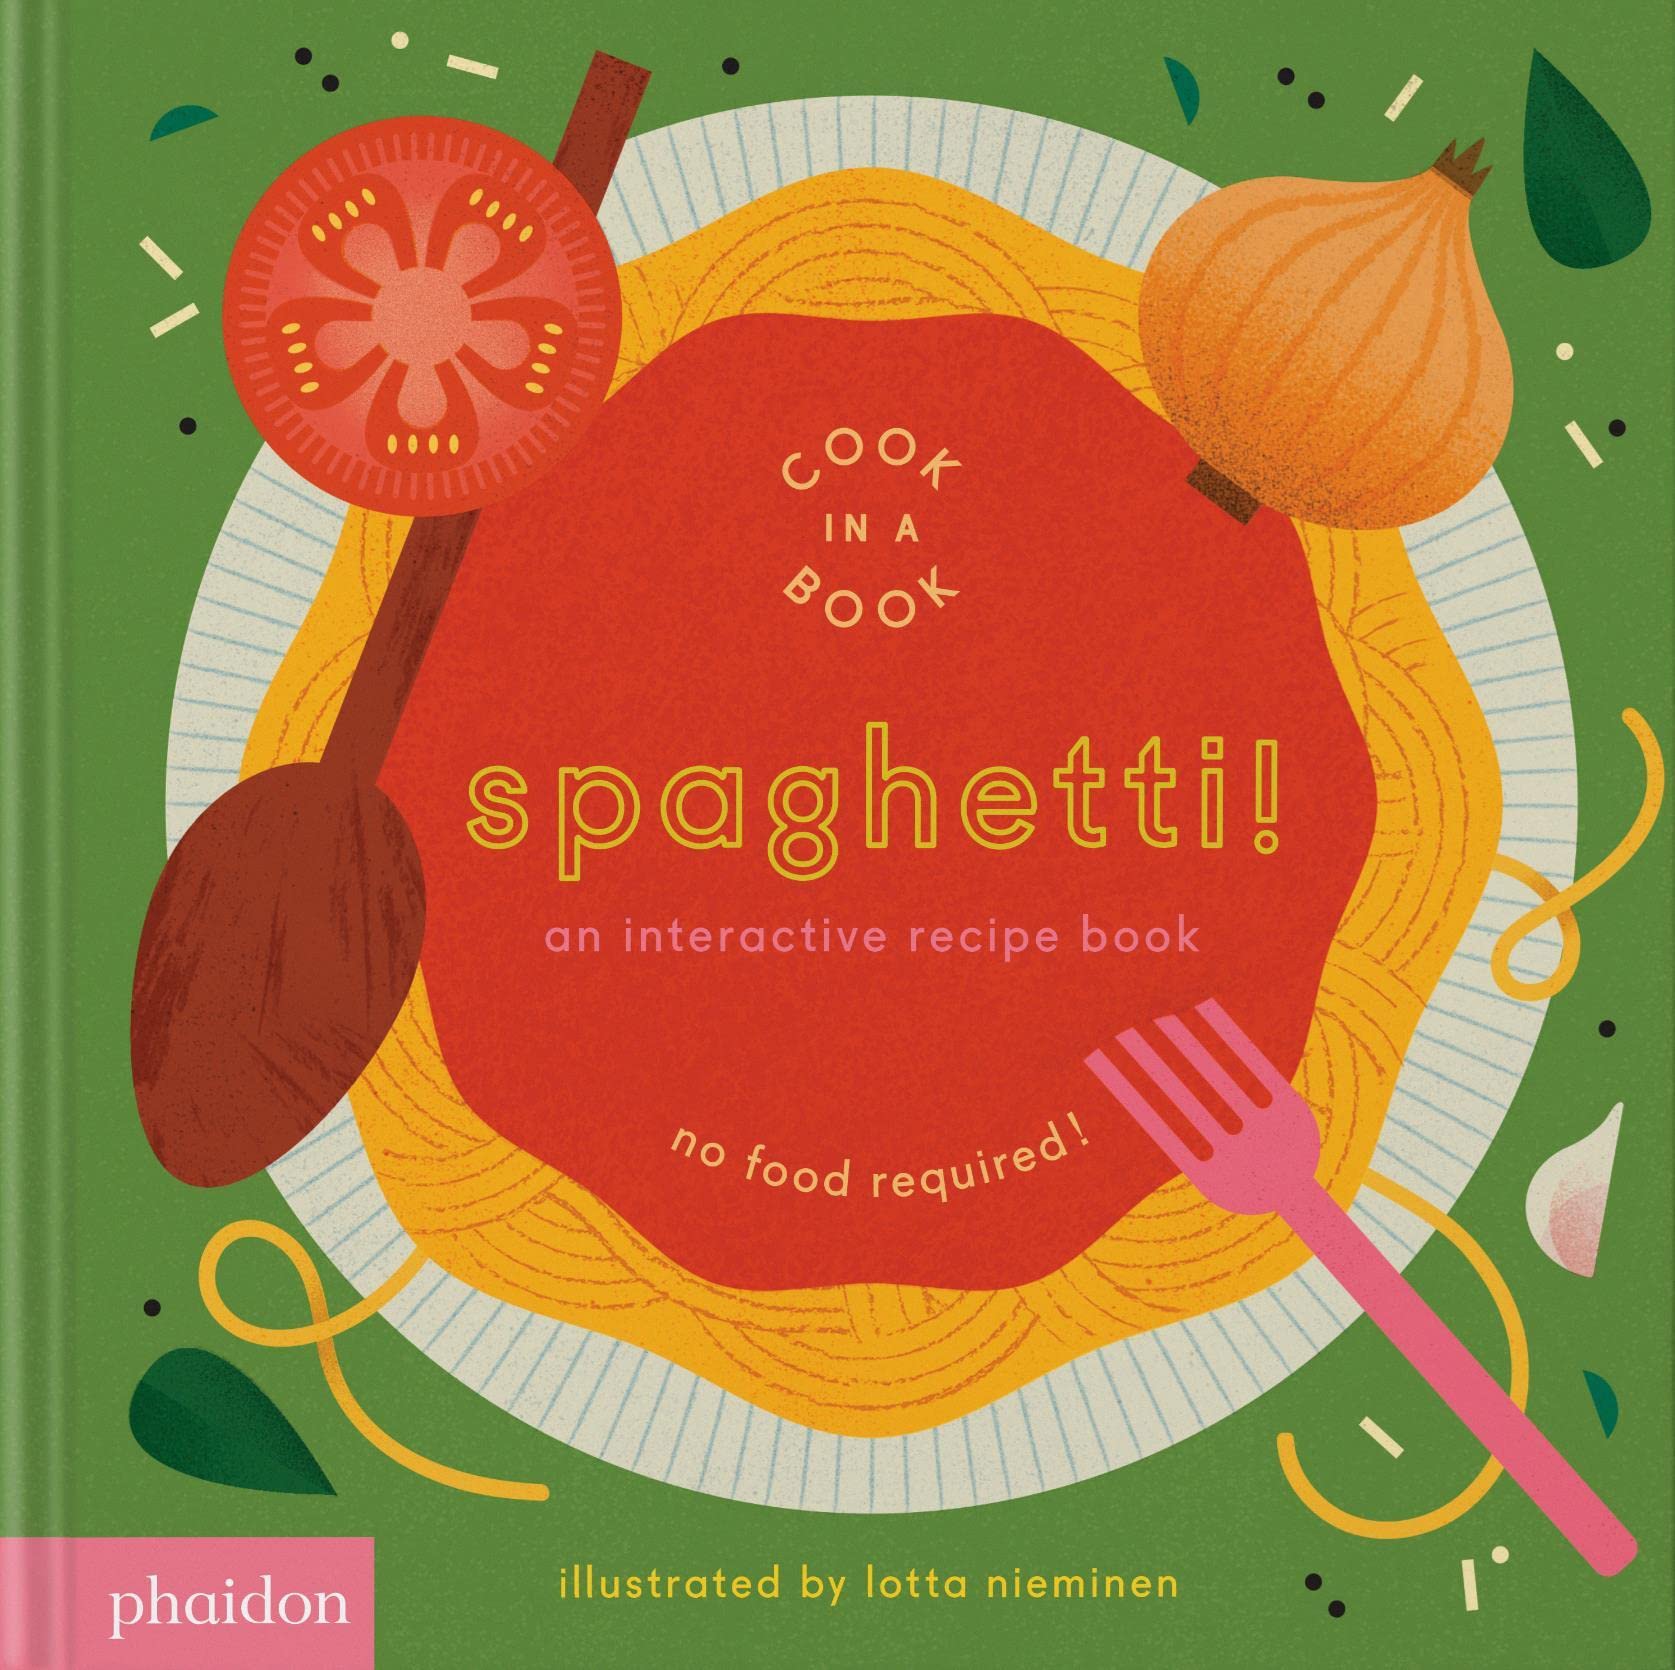 Cook in a Book: Spaghetti! (Lotta Nieminen)